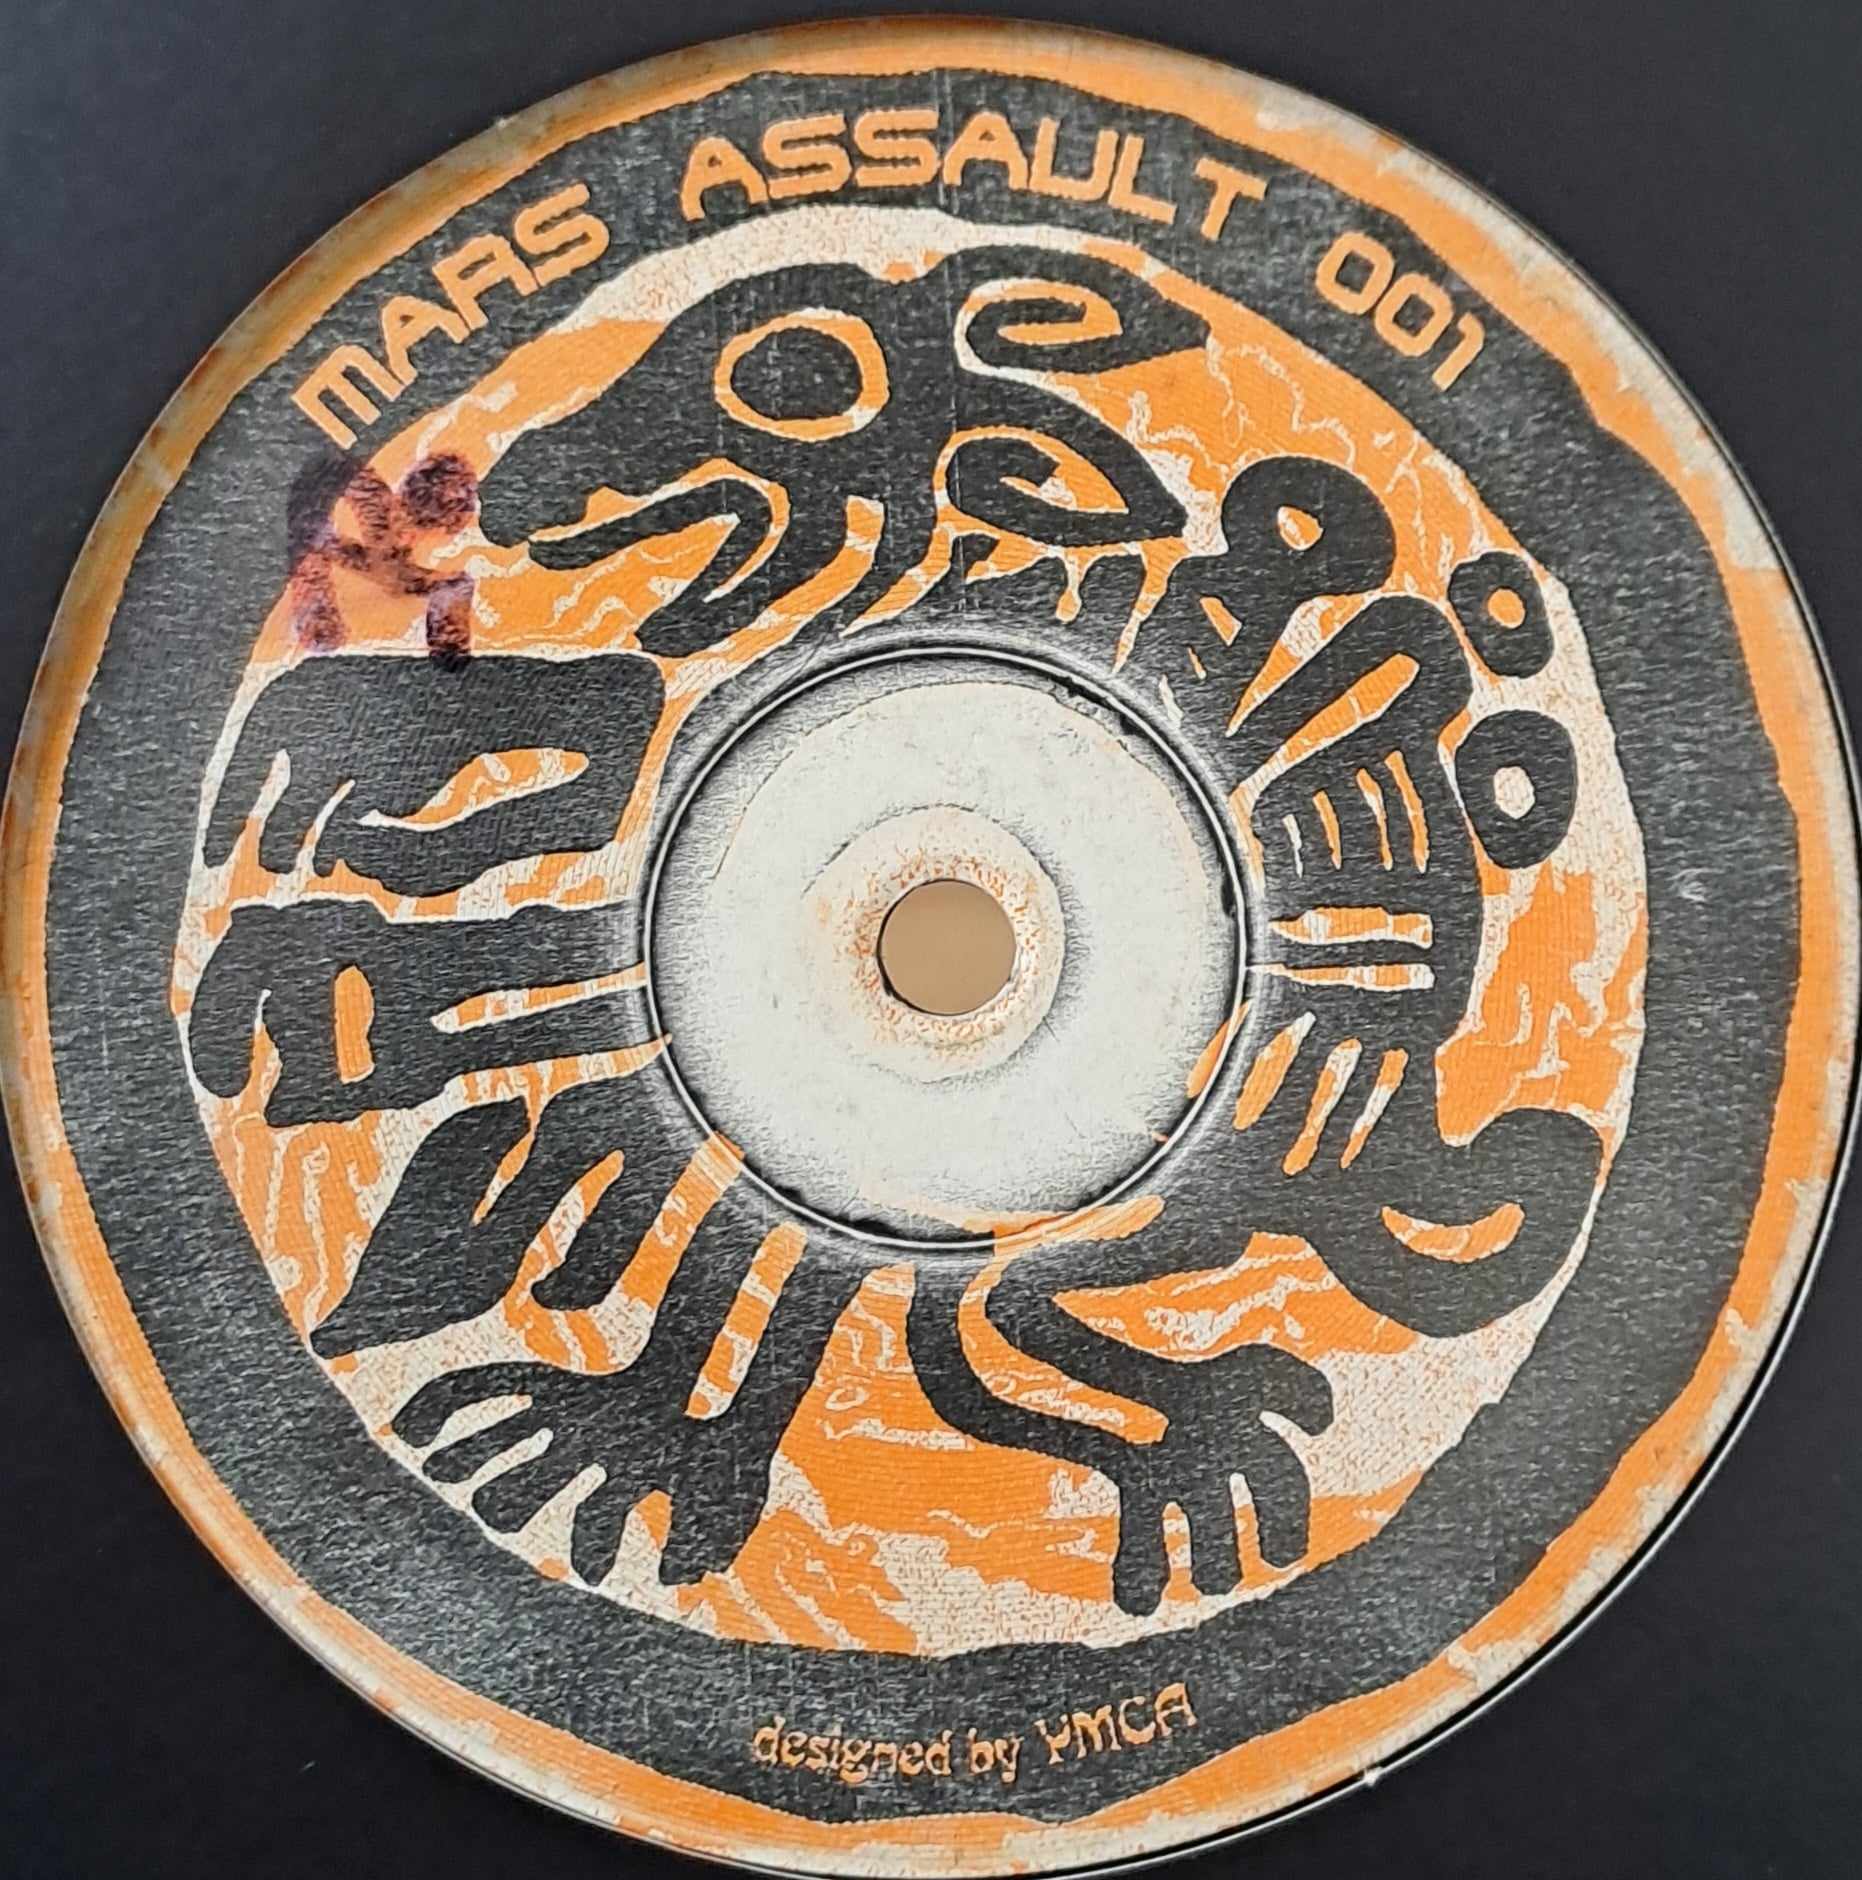 Mars Assault 001 - vinyle freetekno